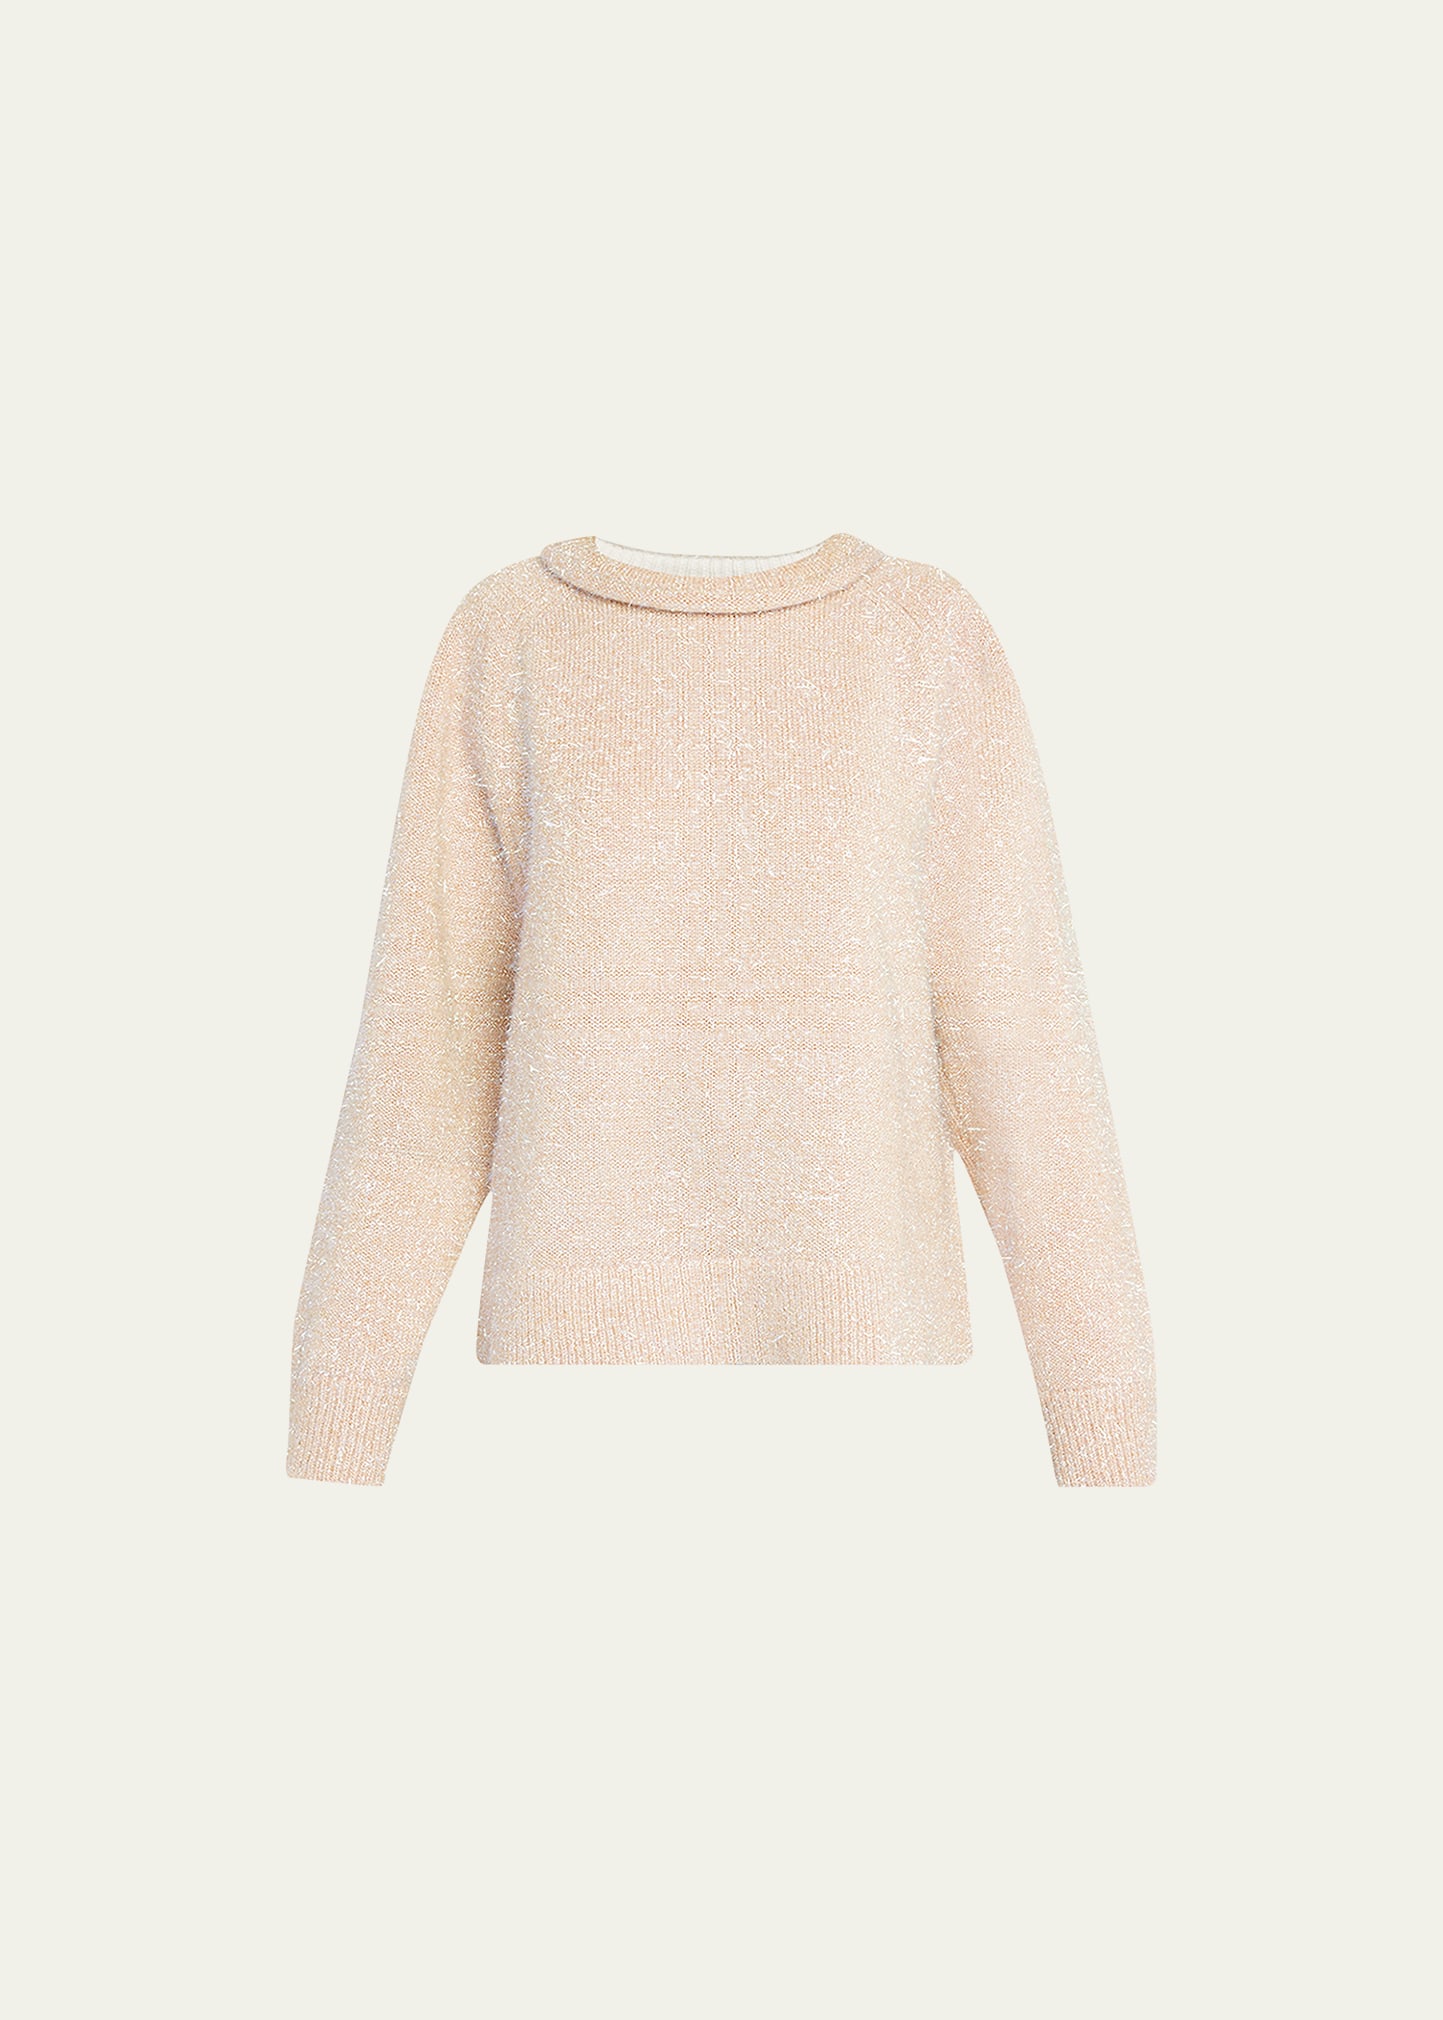 Oversized Iridescent Sweater